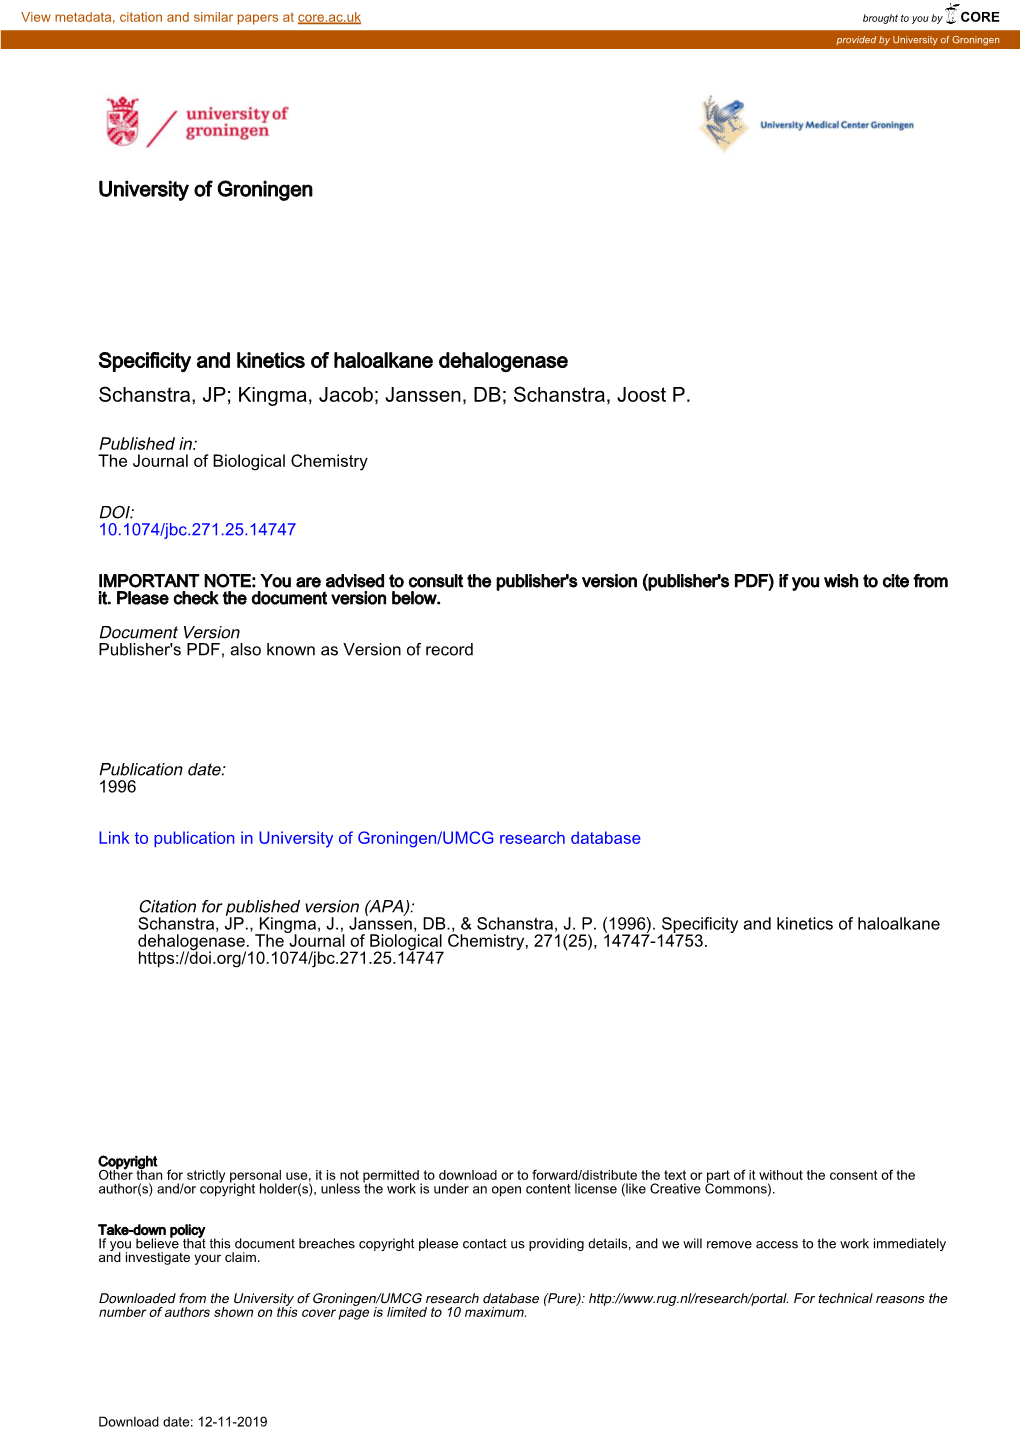 University of Groningen Specificity and Kinetics of Haloalkane